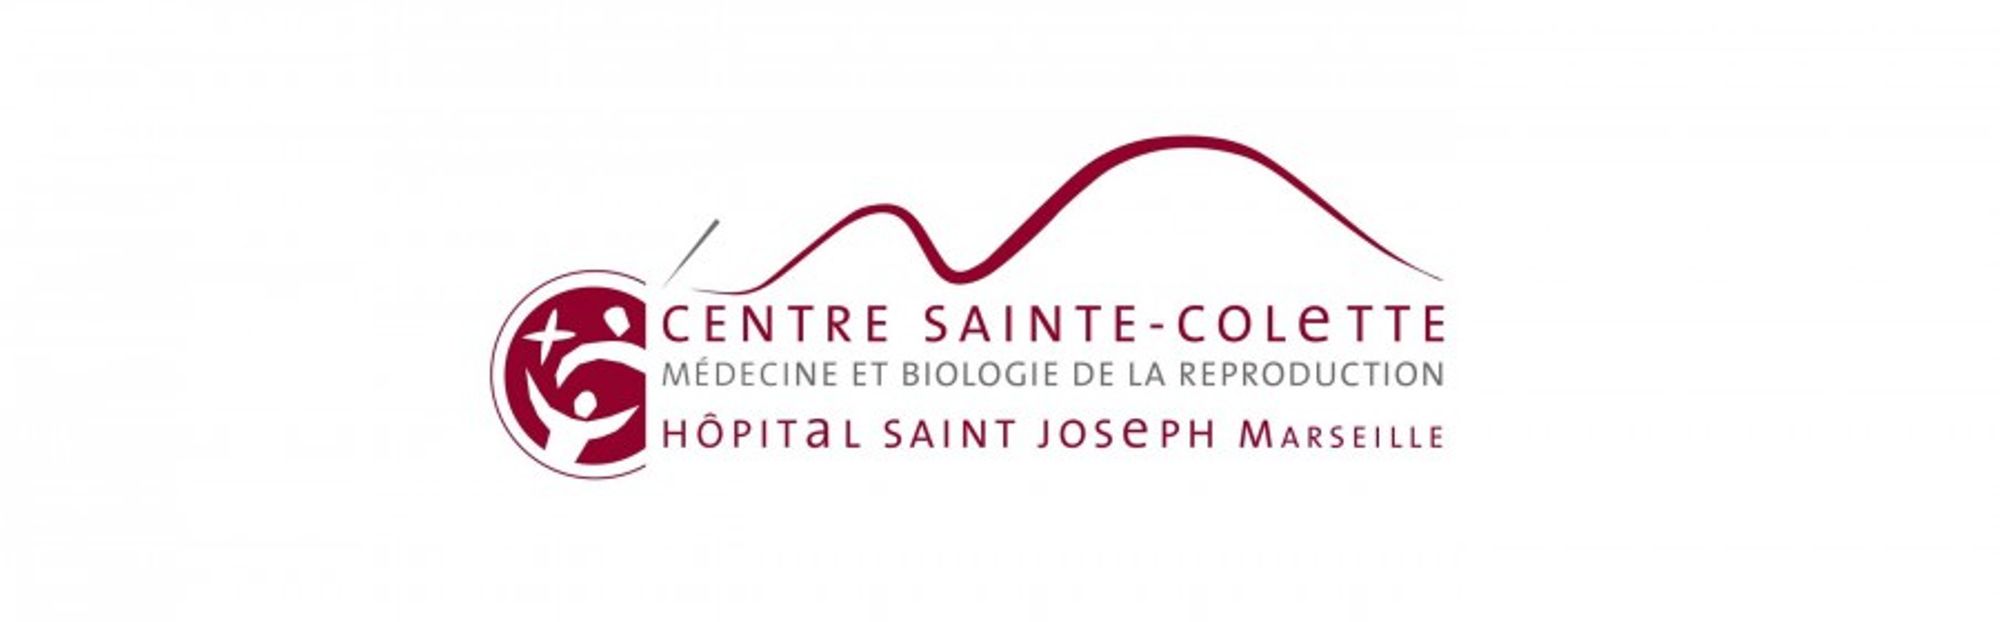 Centre Sainte-Colette